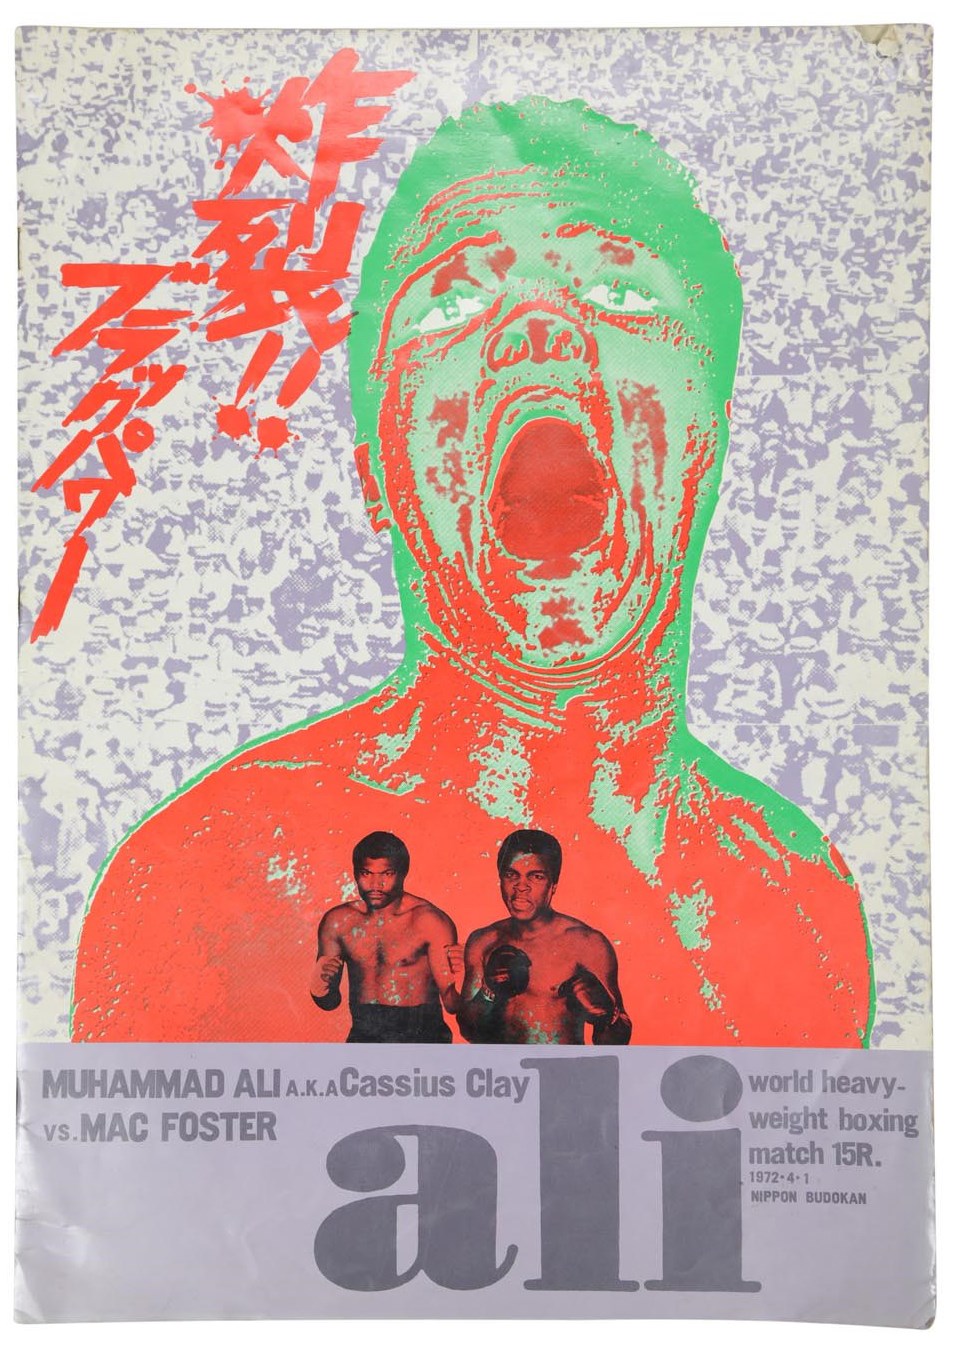 Muhammad Ali & Boxing - 1972 Muhammad Ali v. Mac Foster Boxing "Site" Program